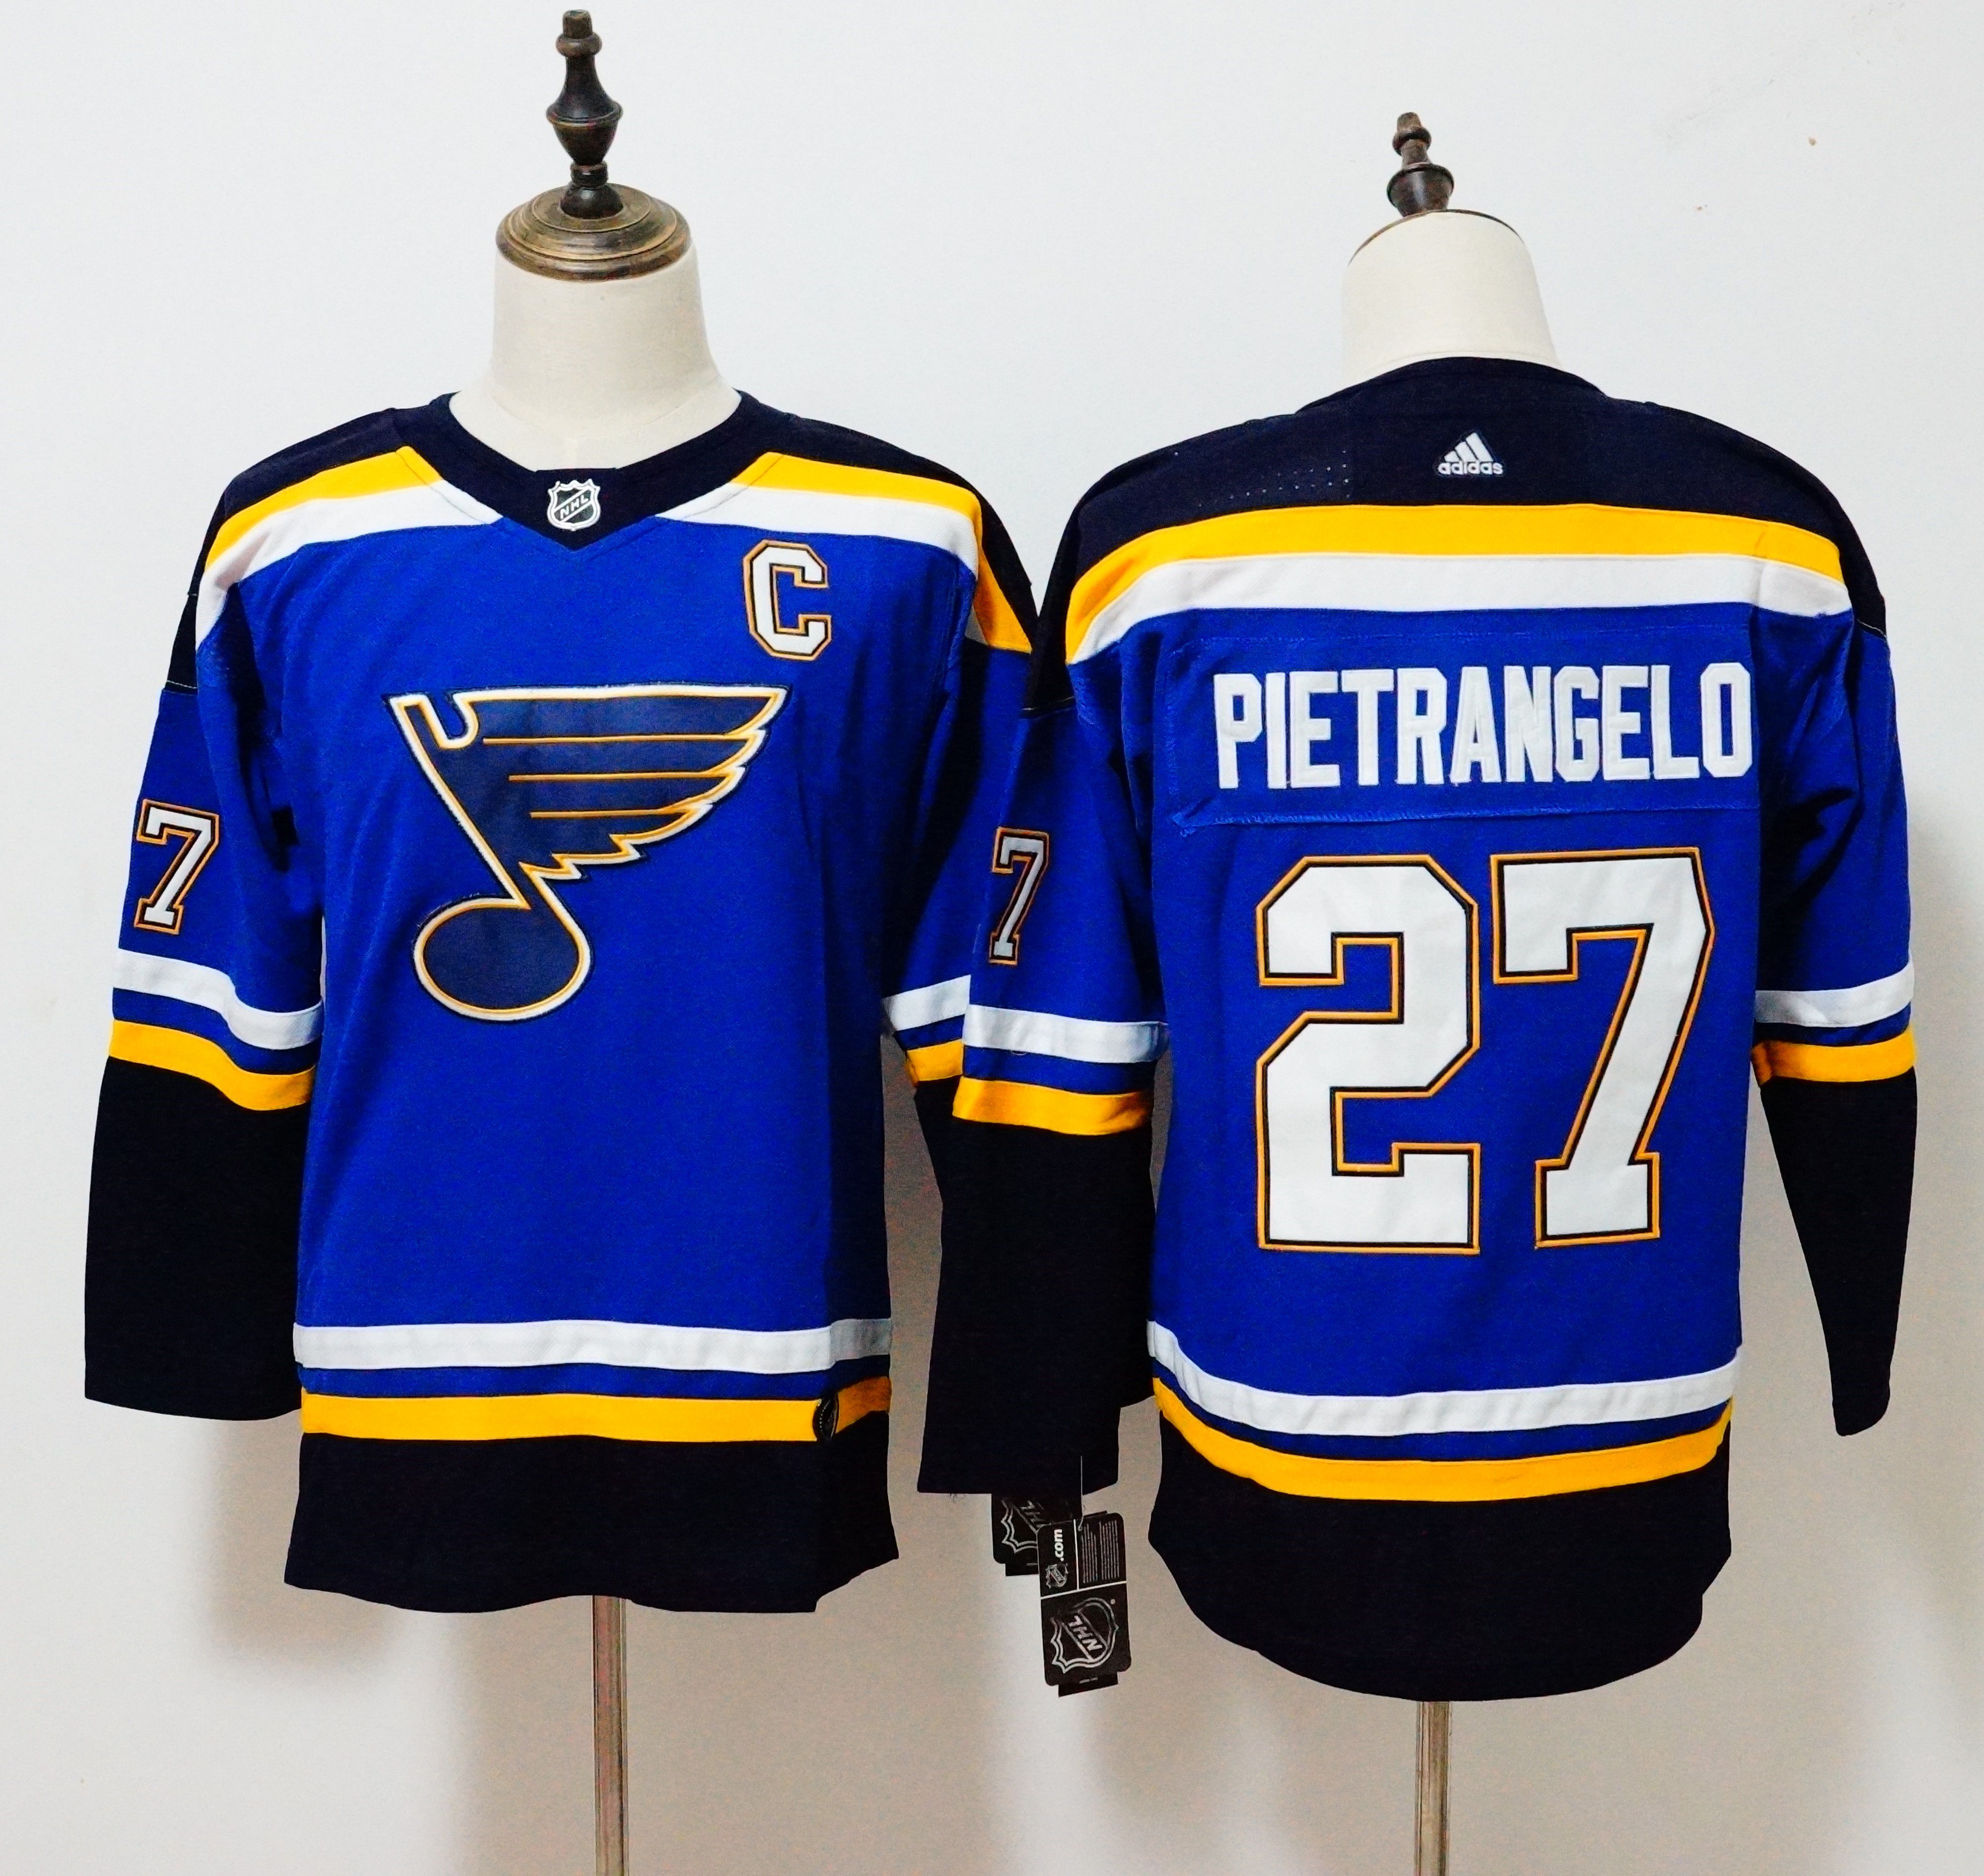 Women St. Louis Blues #27 Pietrangelo Blue Hockey Stitched Adidas NHL Jerseys